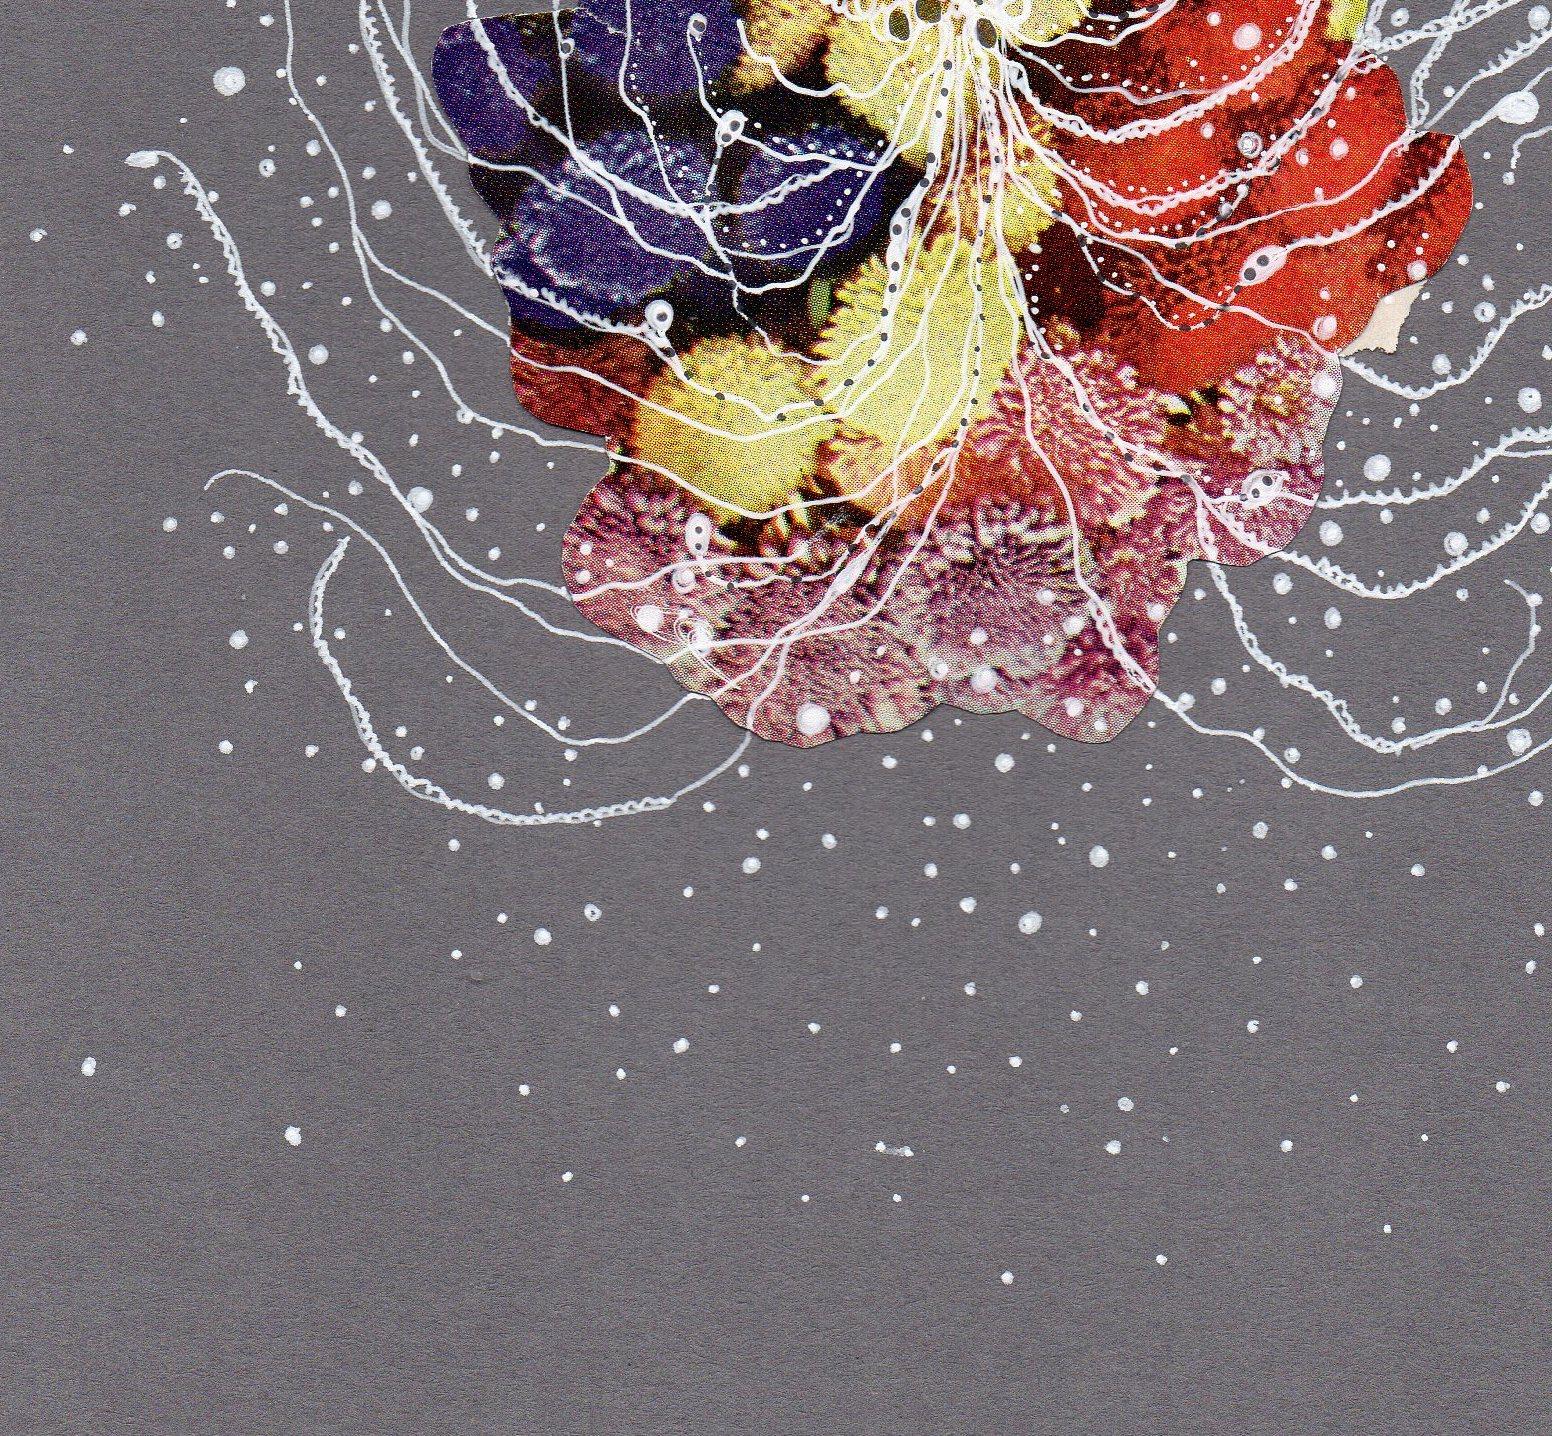 Stardust Cephalopod, Abstraktes abstraktes nautisches Mixed Media Werk, 2015
11